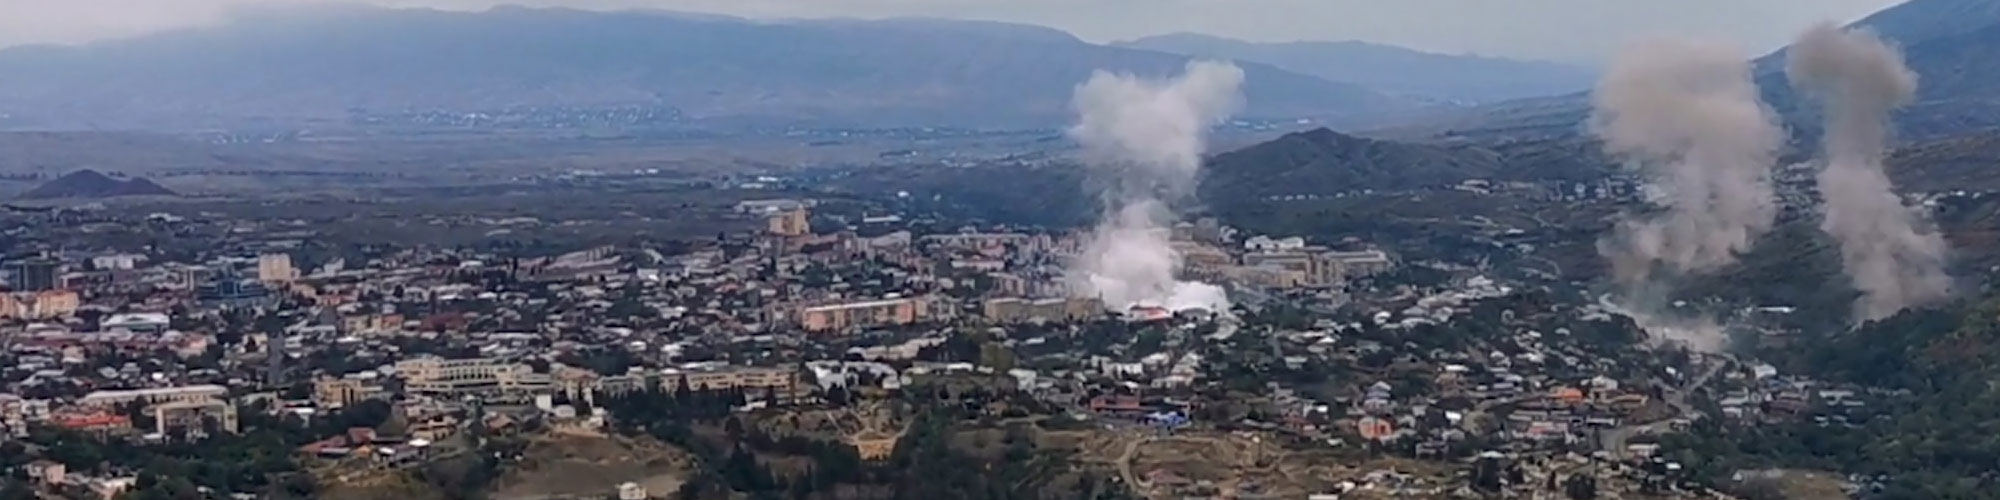 The bombardment of Karabakh capital Stepanakert by Azerbaijan caused widespread destruction and many civilian deaths. Artsakh (Nagorno Karabakh)